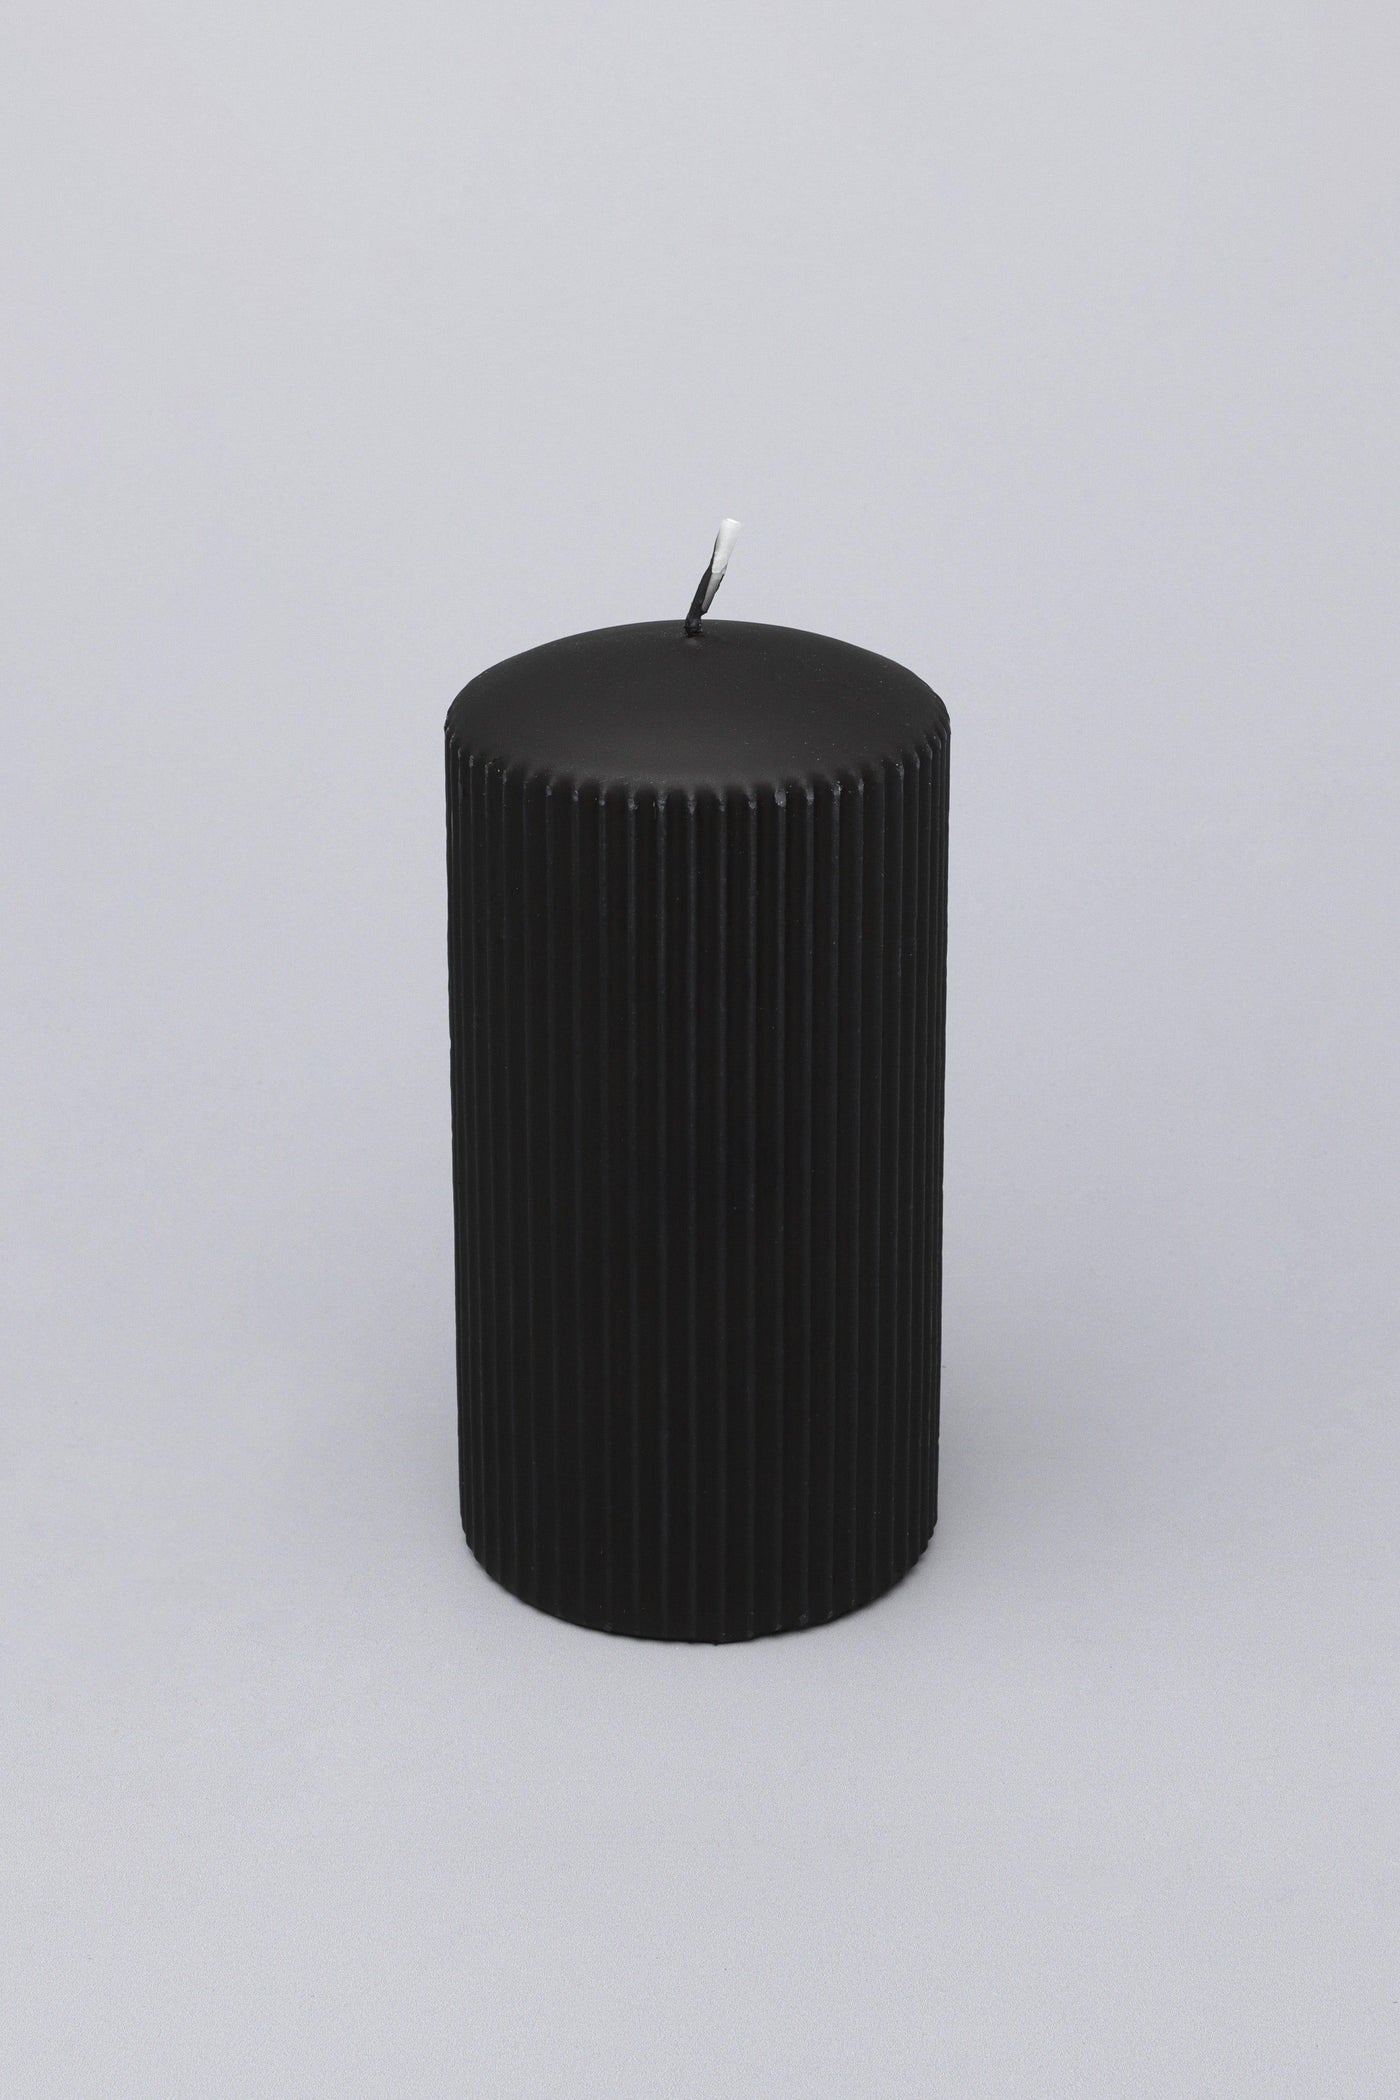 Gdecorstore Candles Black / Large Ribbed Textured Jade Black Gothic Vintage Pillar Candle